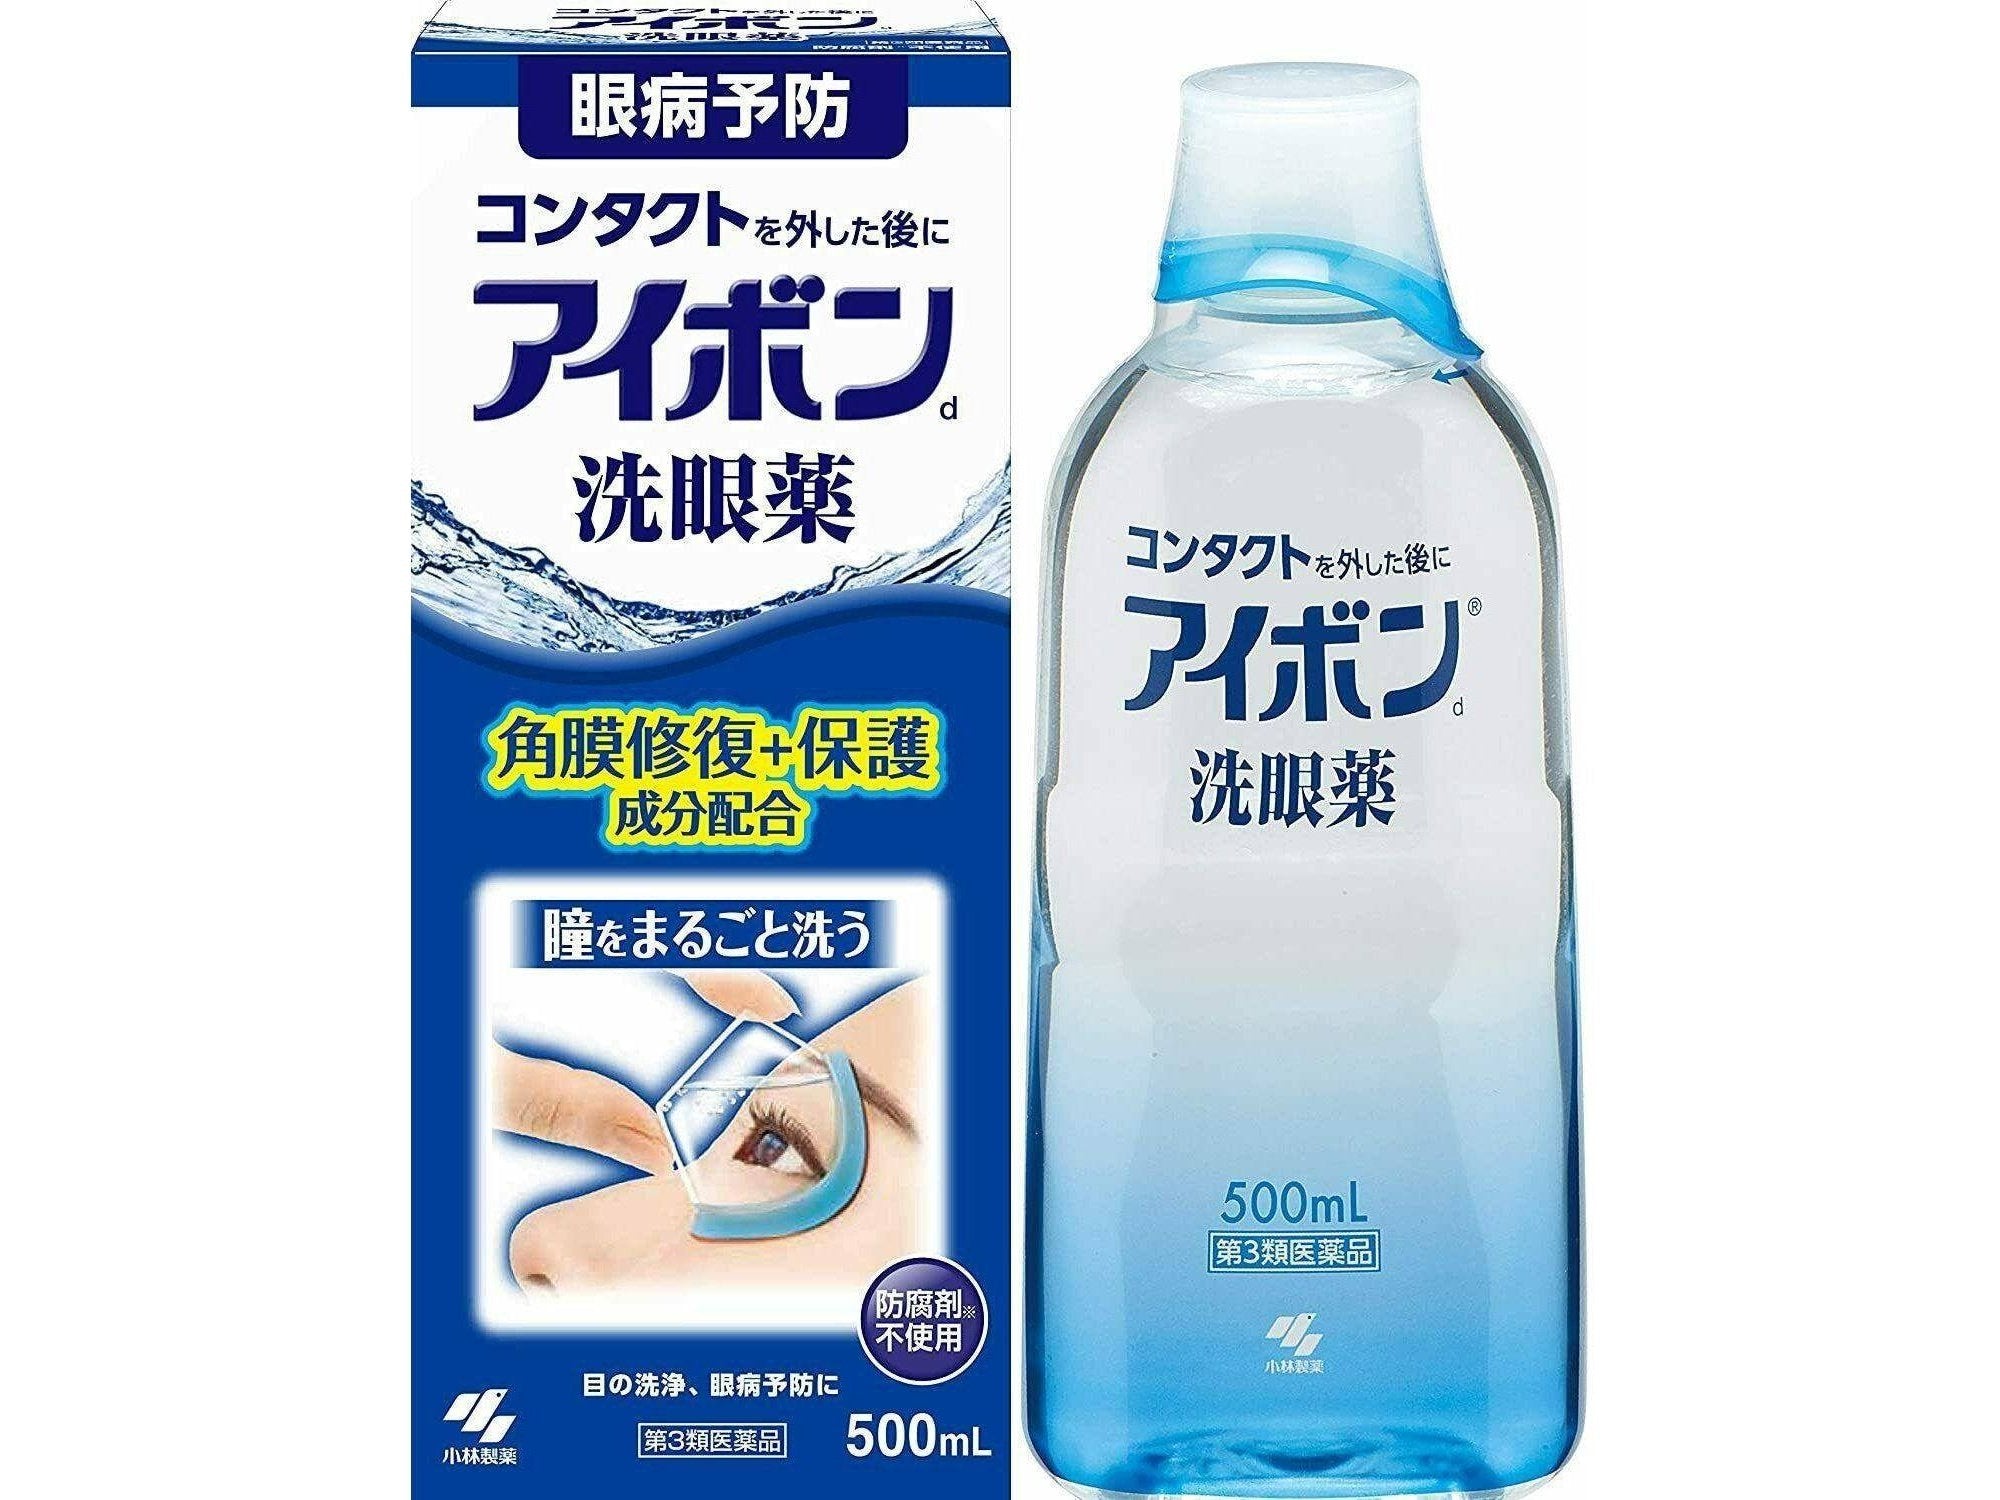 Kobayashi Eyebon Cool Eye Wash Liquid ml Japan